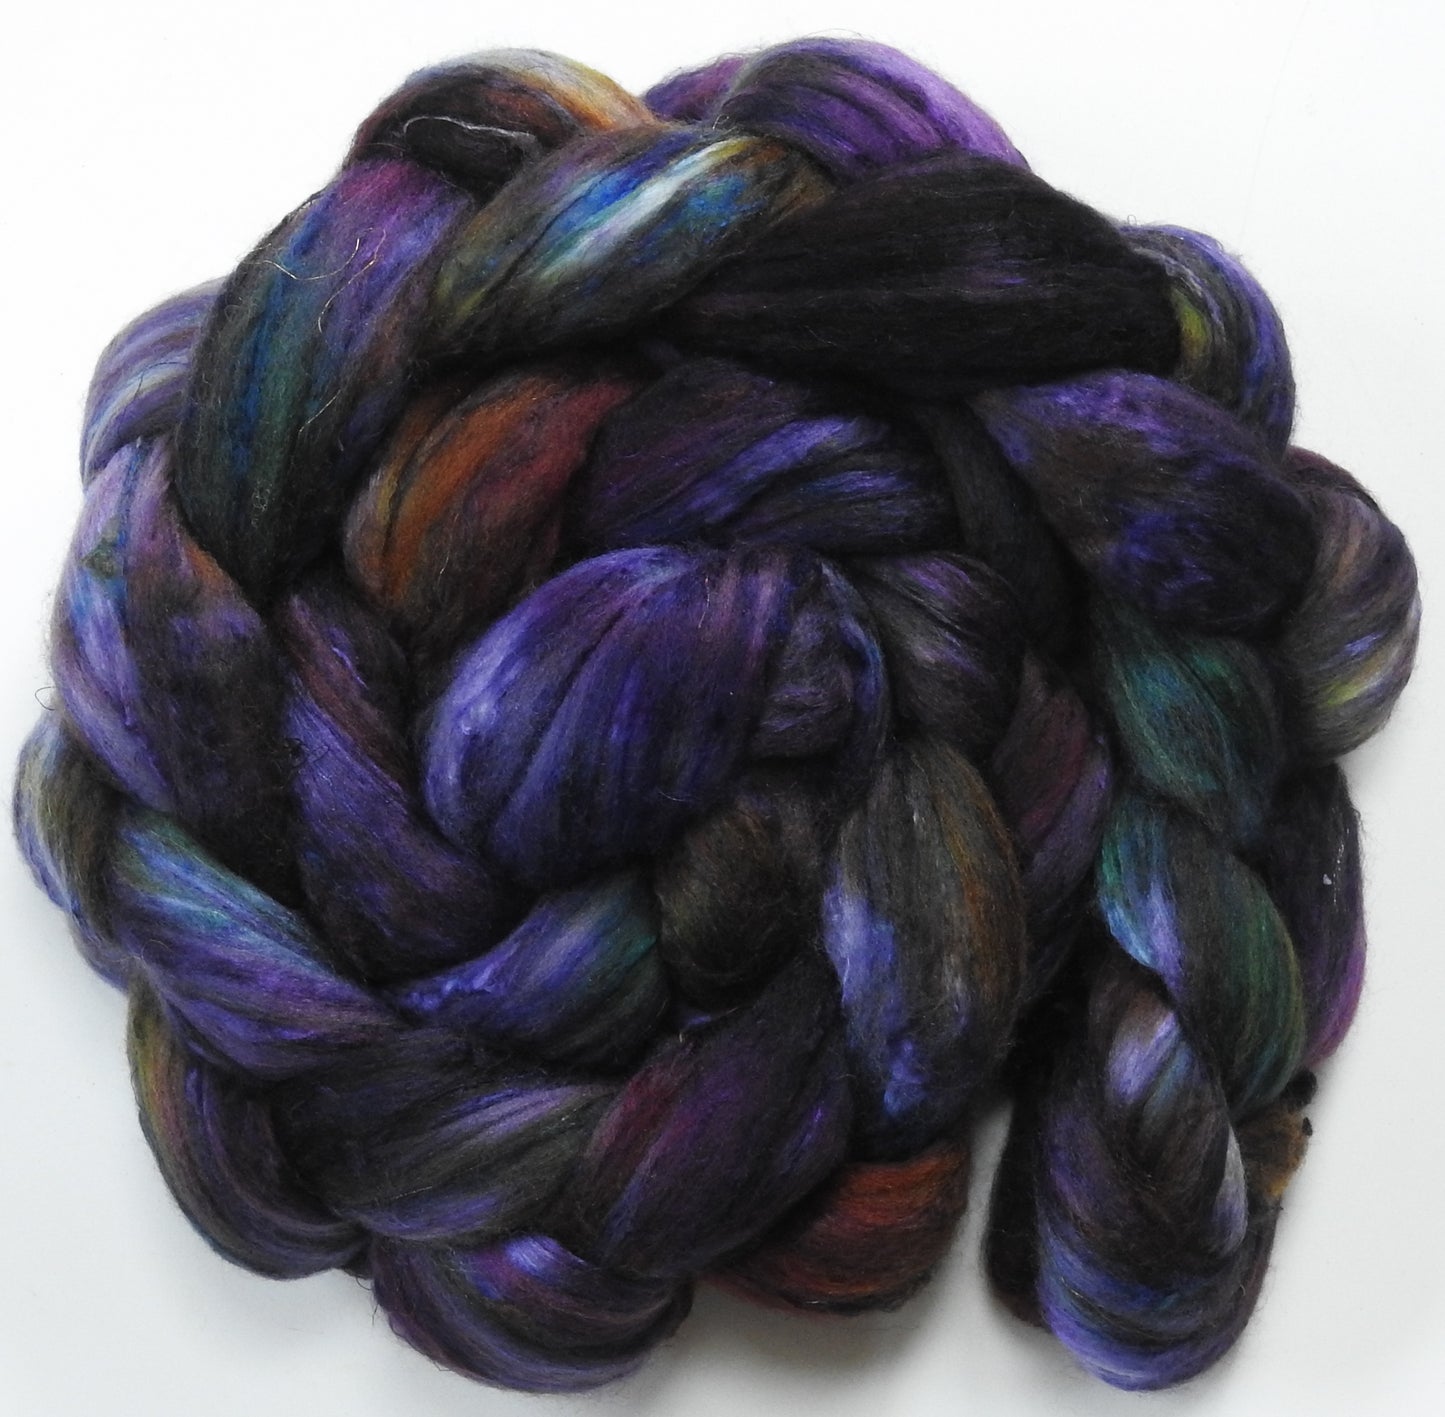 Sherlock - Batt in a Braid #39ish - Falkland Merino/ Mulberry Silk / Sari Silk (60/25/15)